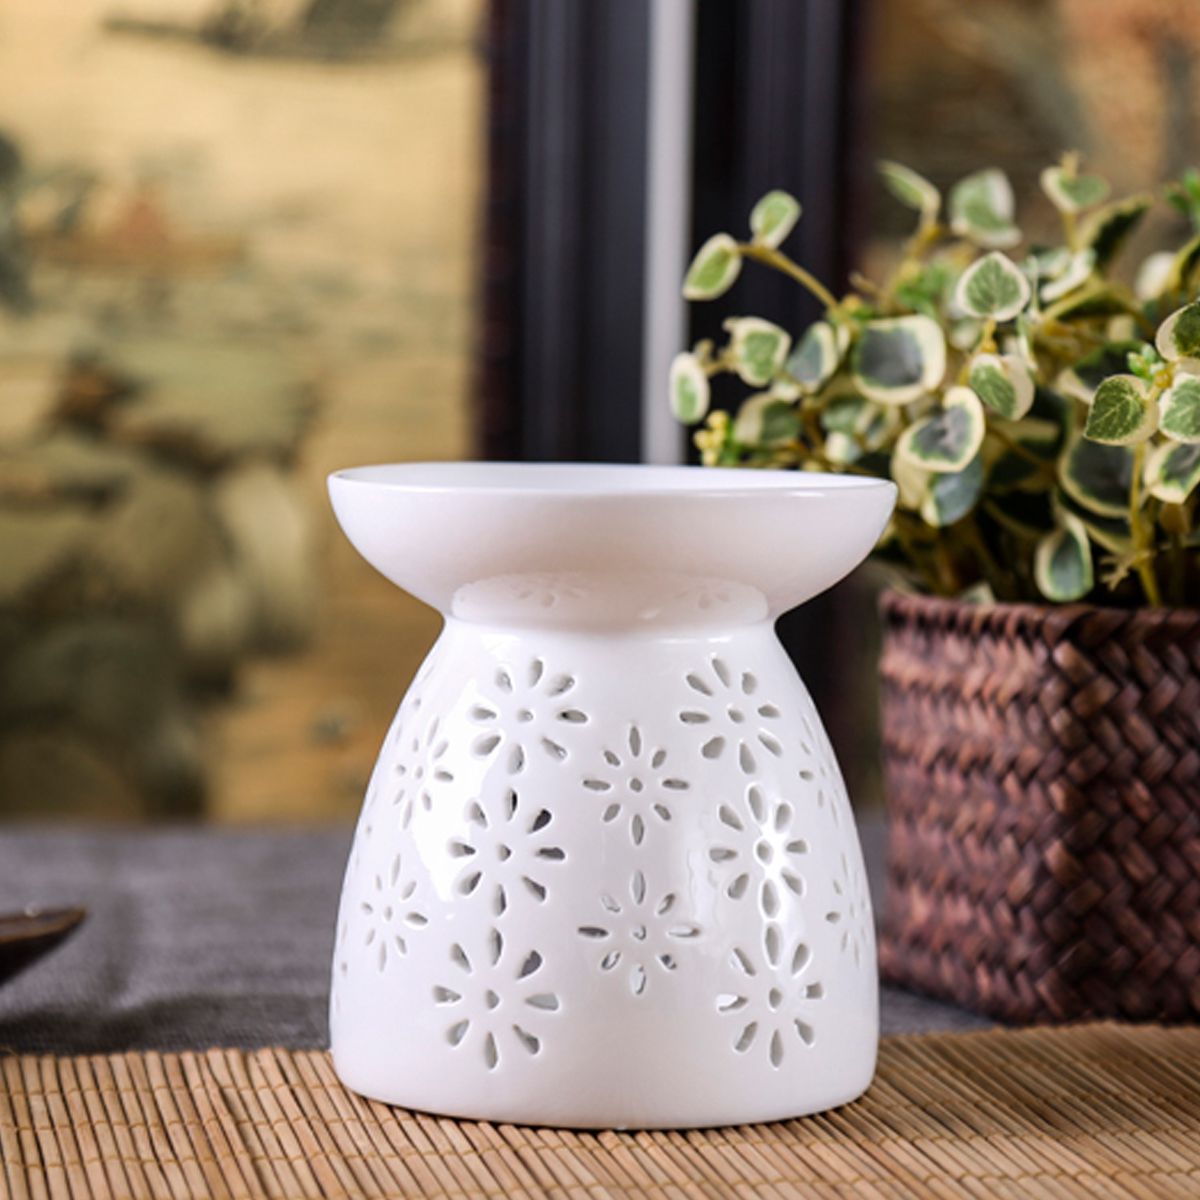 Ceramic-Wax-Melt-WarmerOil-Incense-Burner-Daisy-Cut-Out-Design-Incense-Holder-1436132